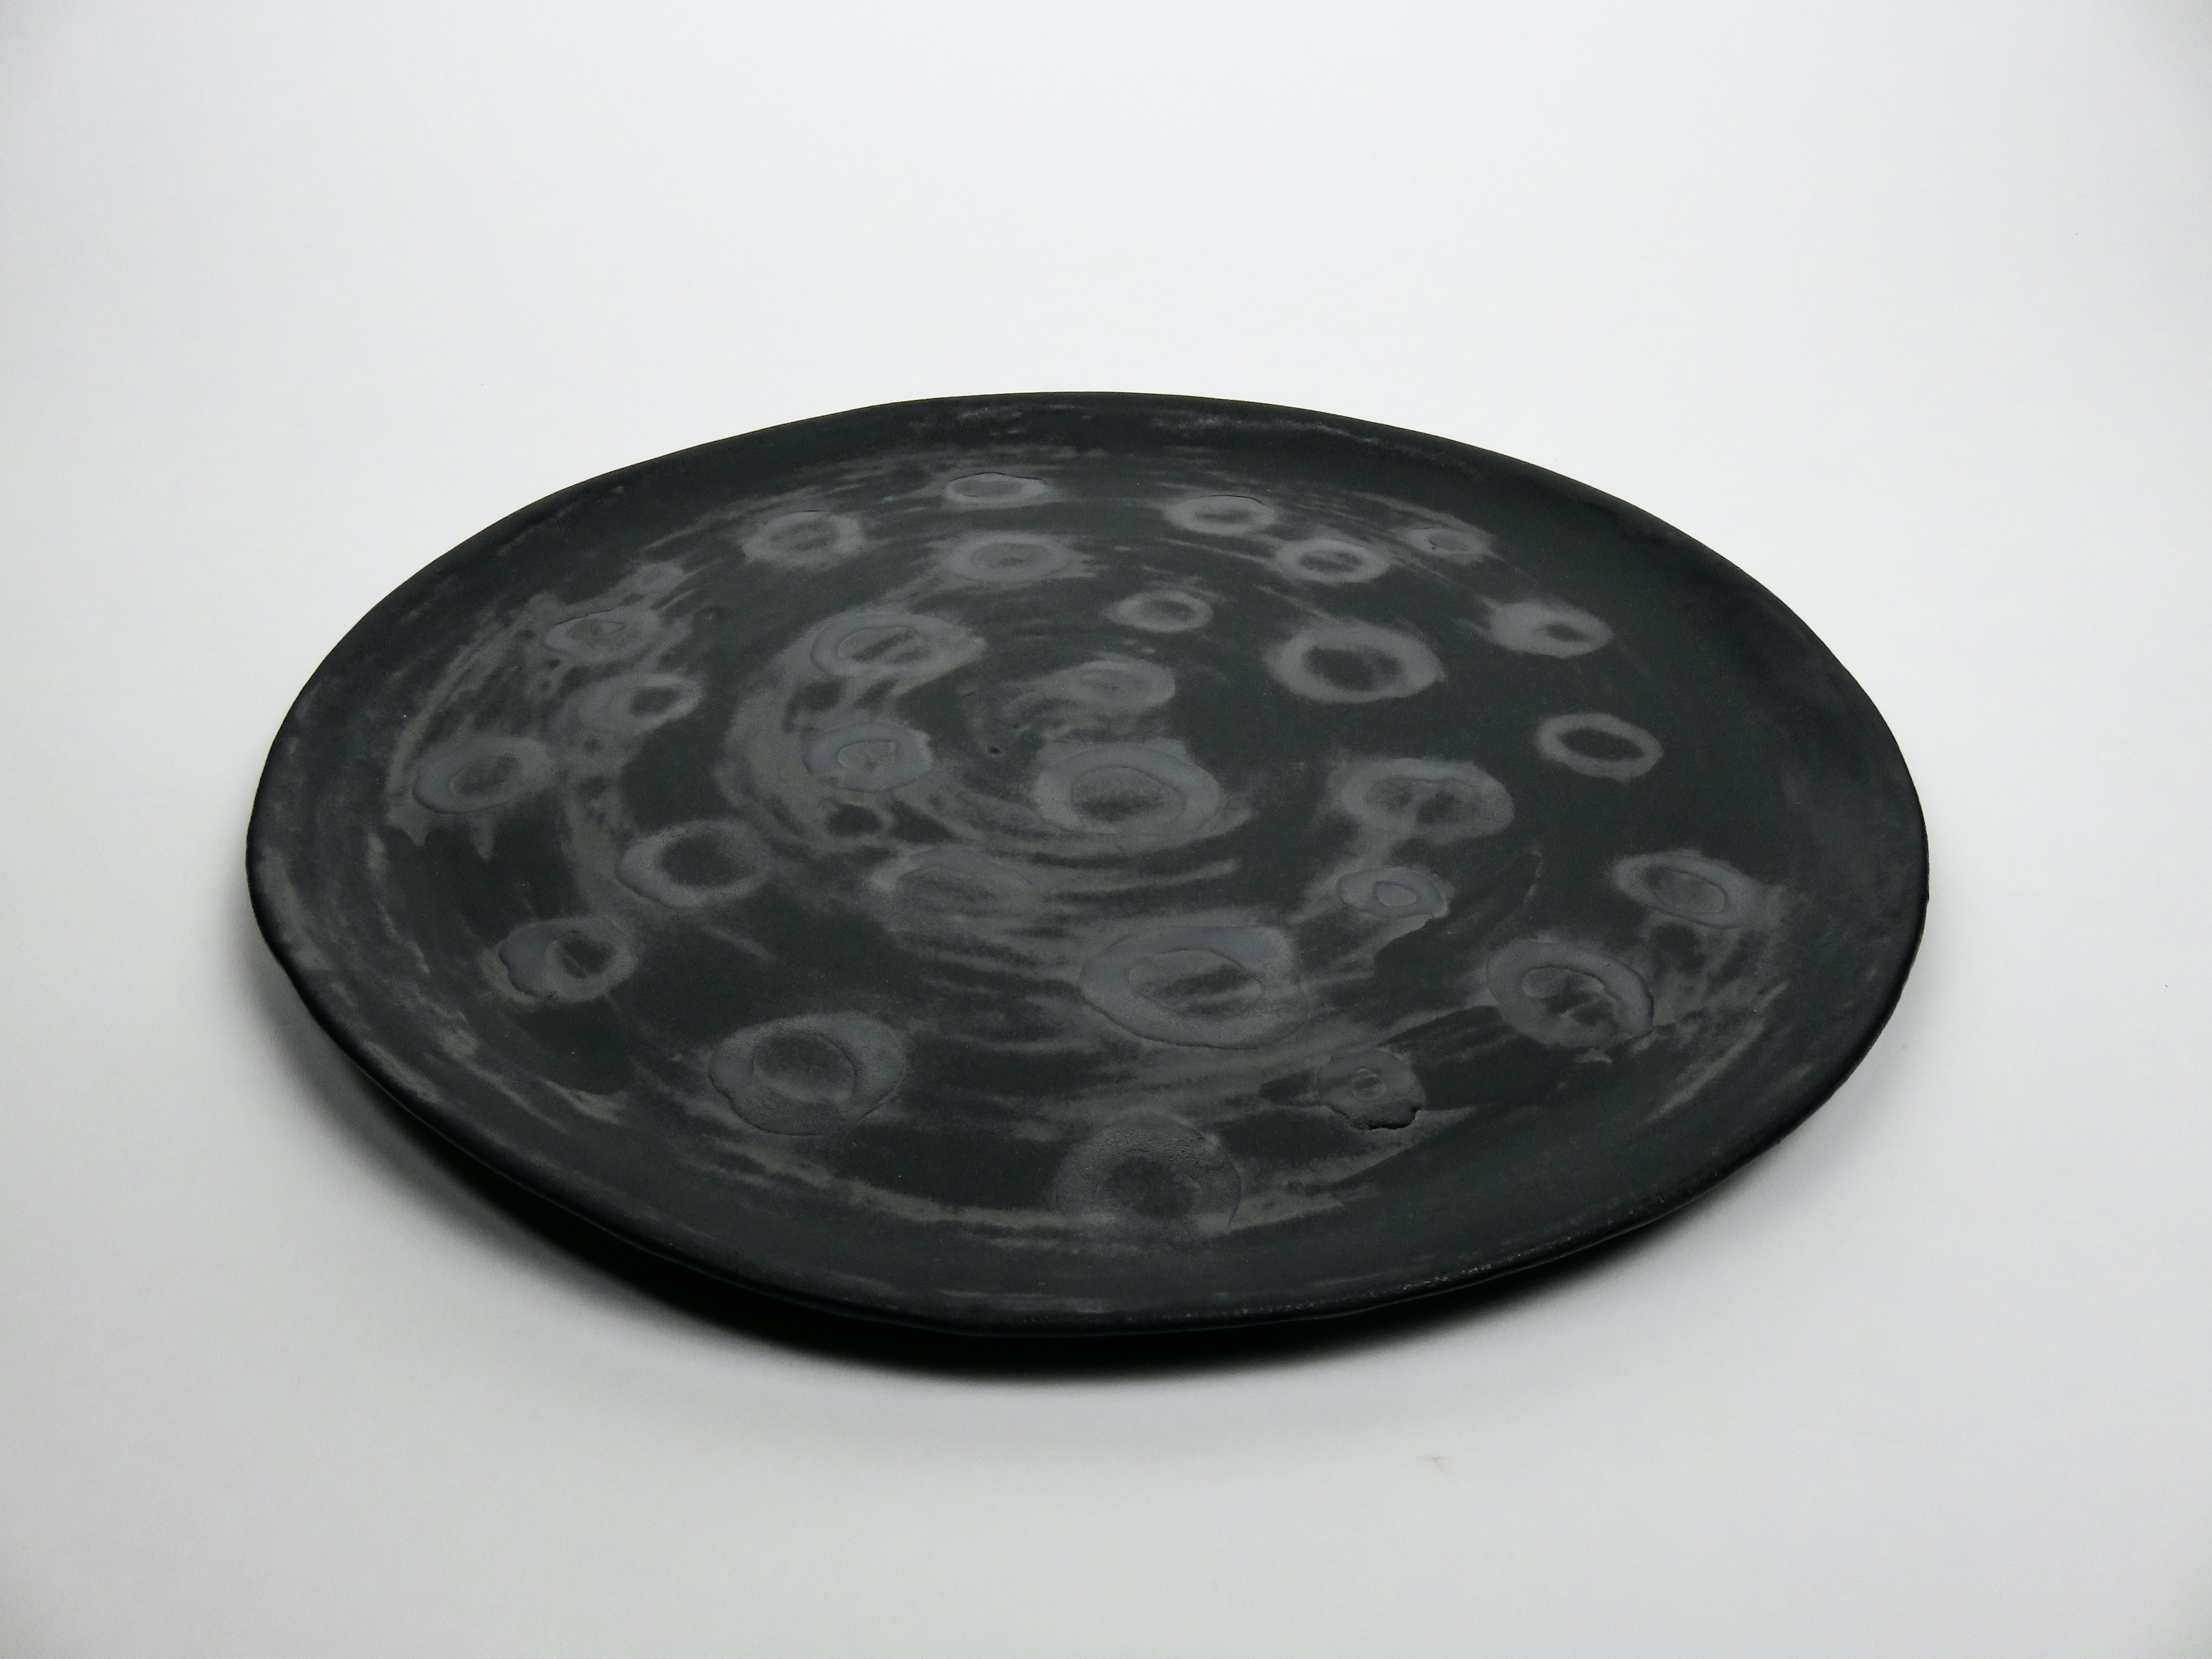 American Large Flat Black Hand Built Ceramic Platter with Metallic Details For Sale